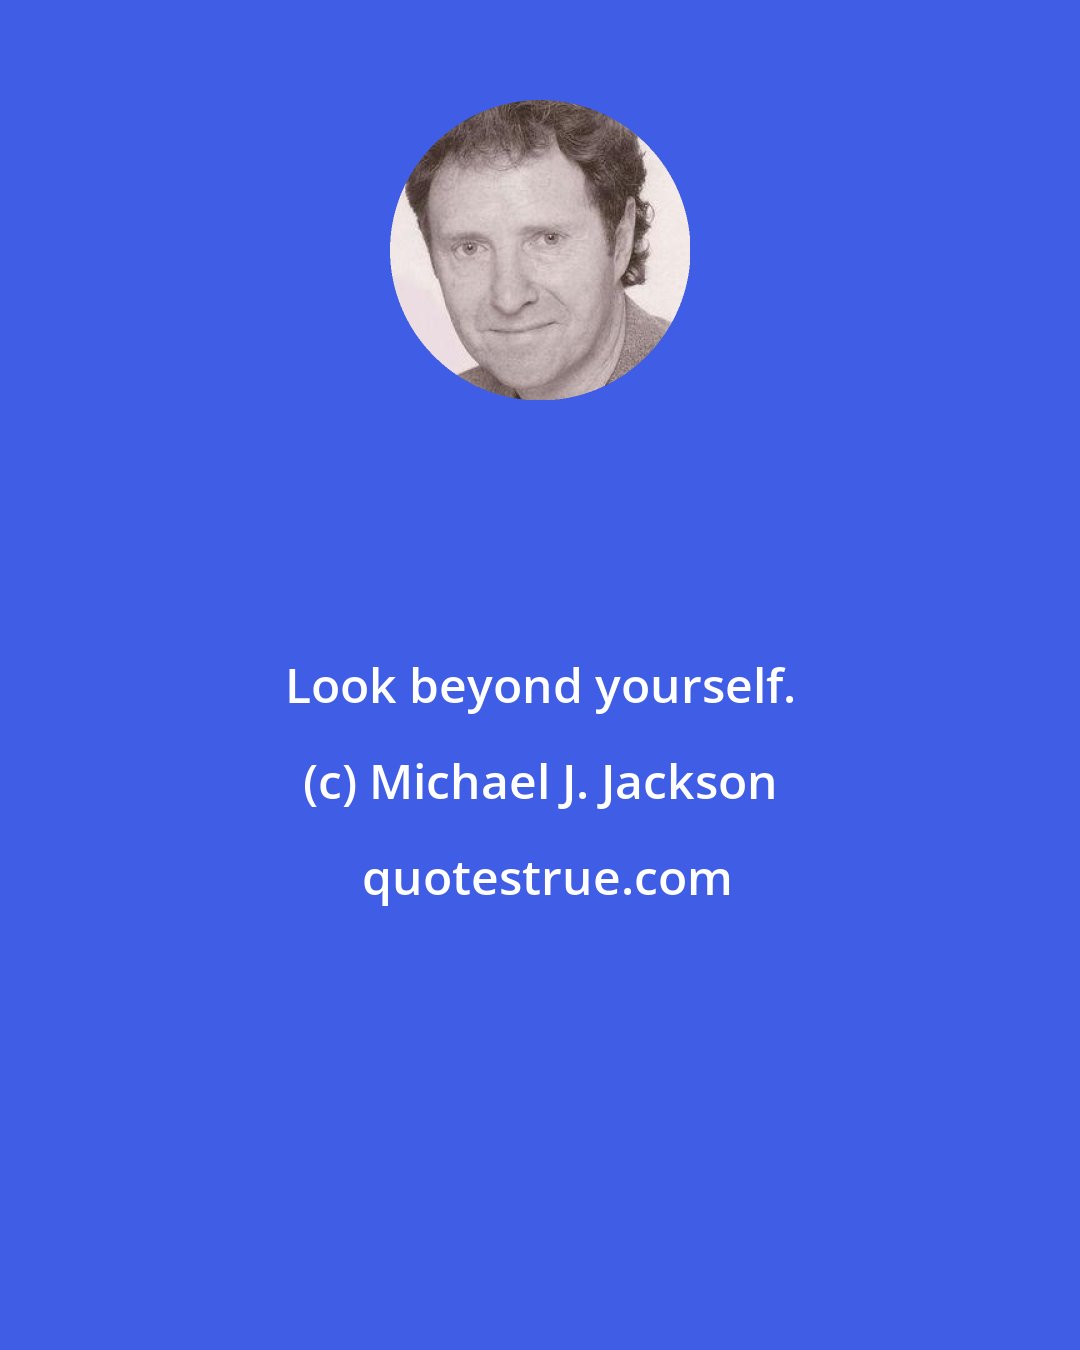 Michael J. Jackson: Look beyond yourself.